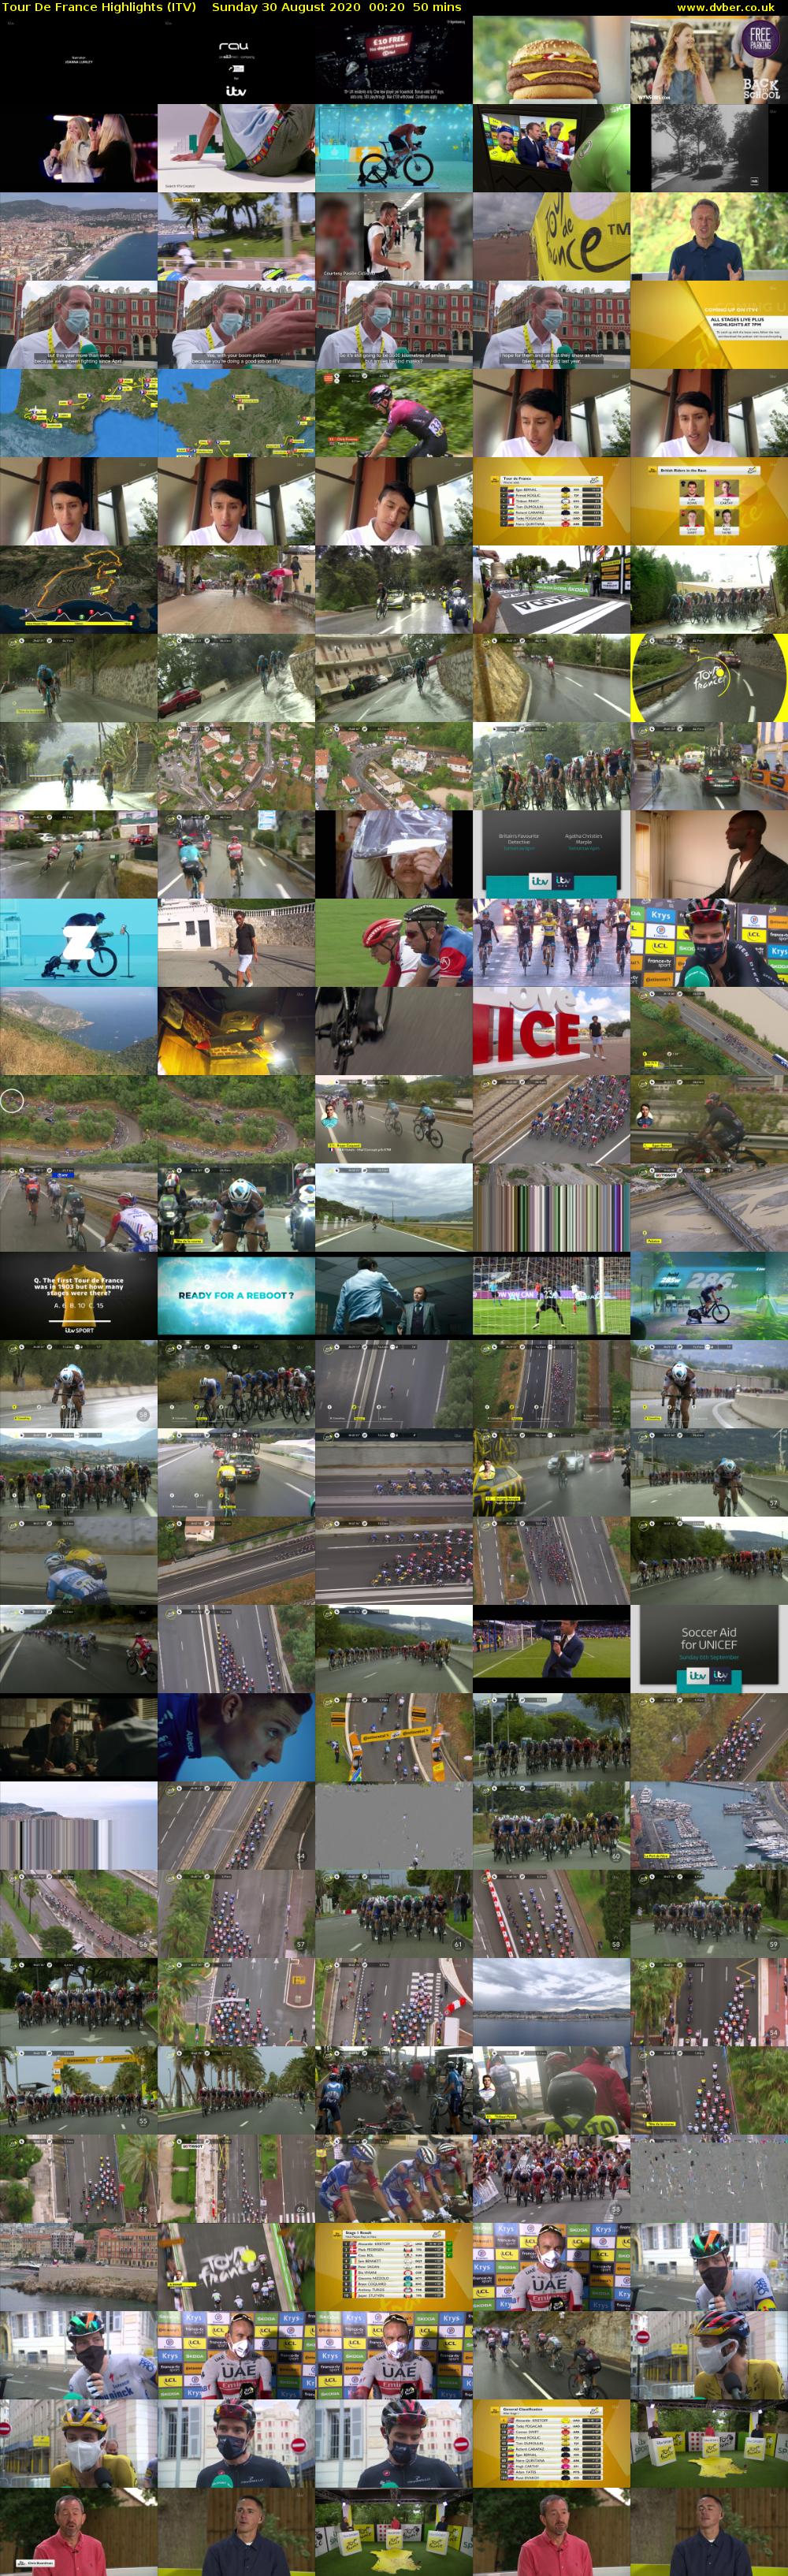 Tour De France Highlights (ITV) Sunday 30 August 2020 00:20 - 01:10